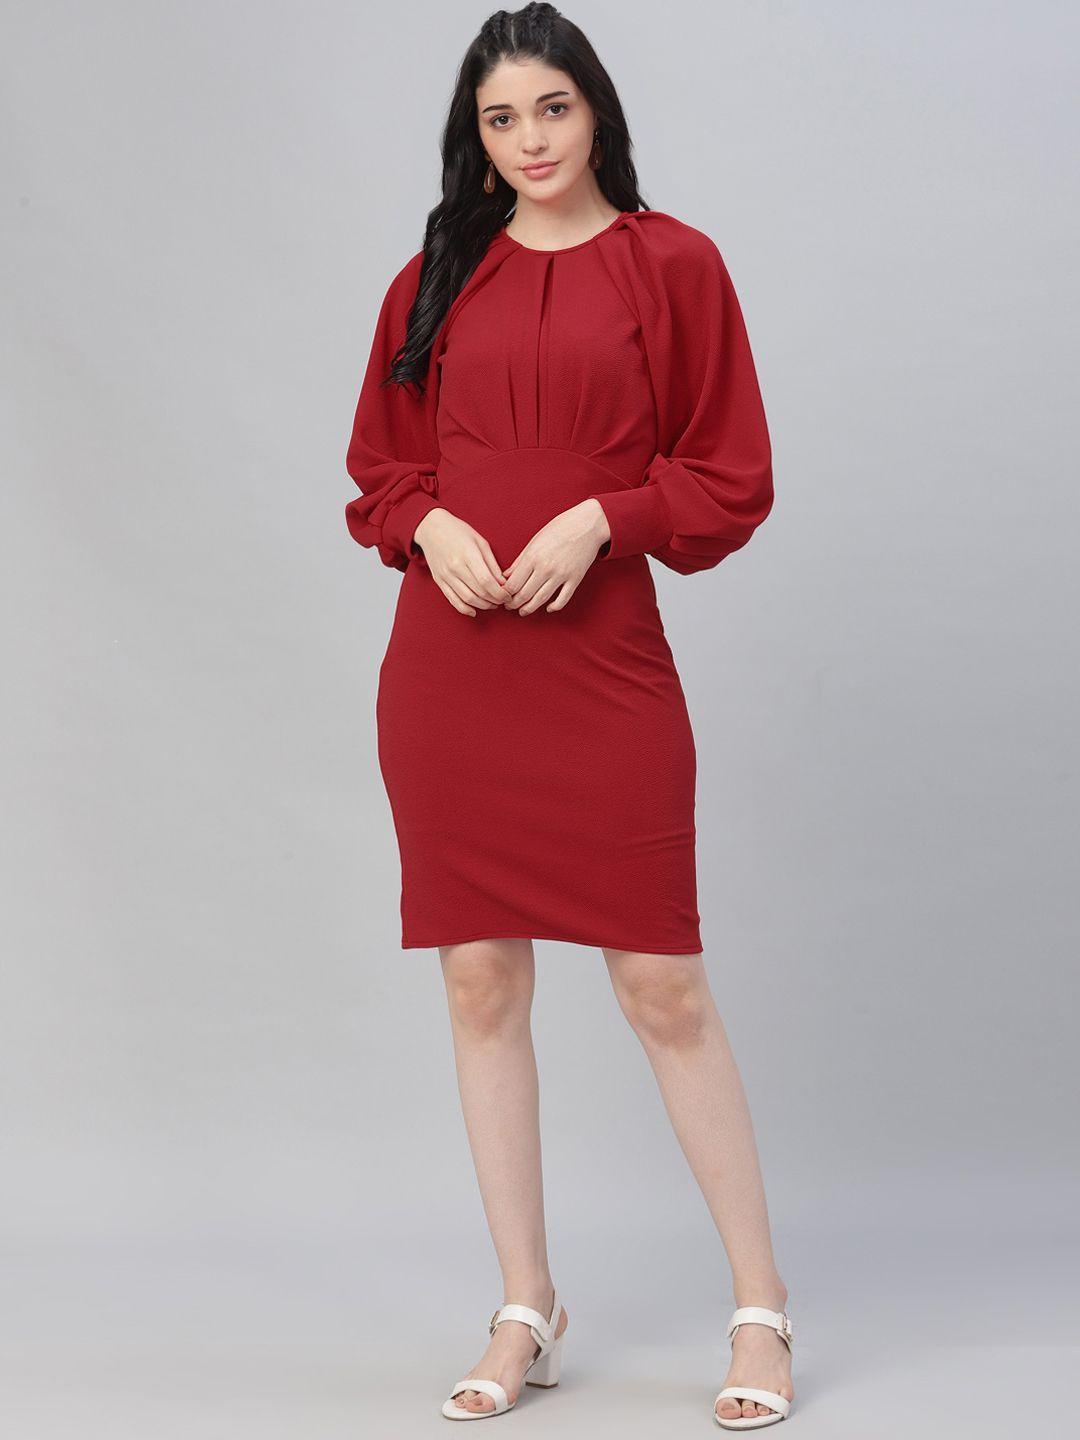 athena red sheath dress